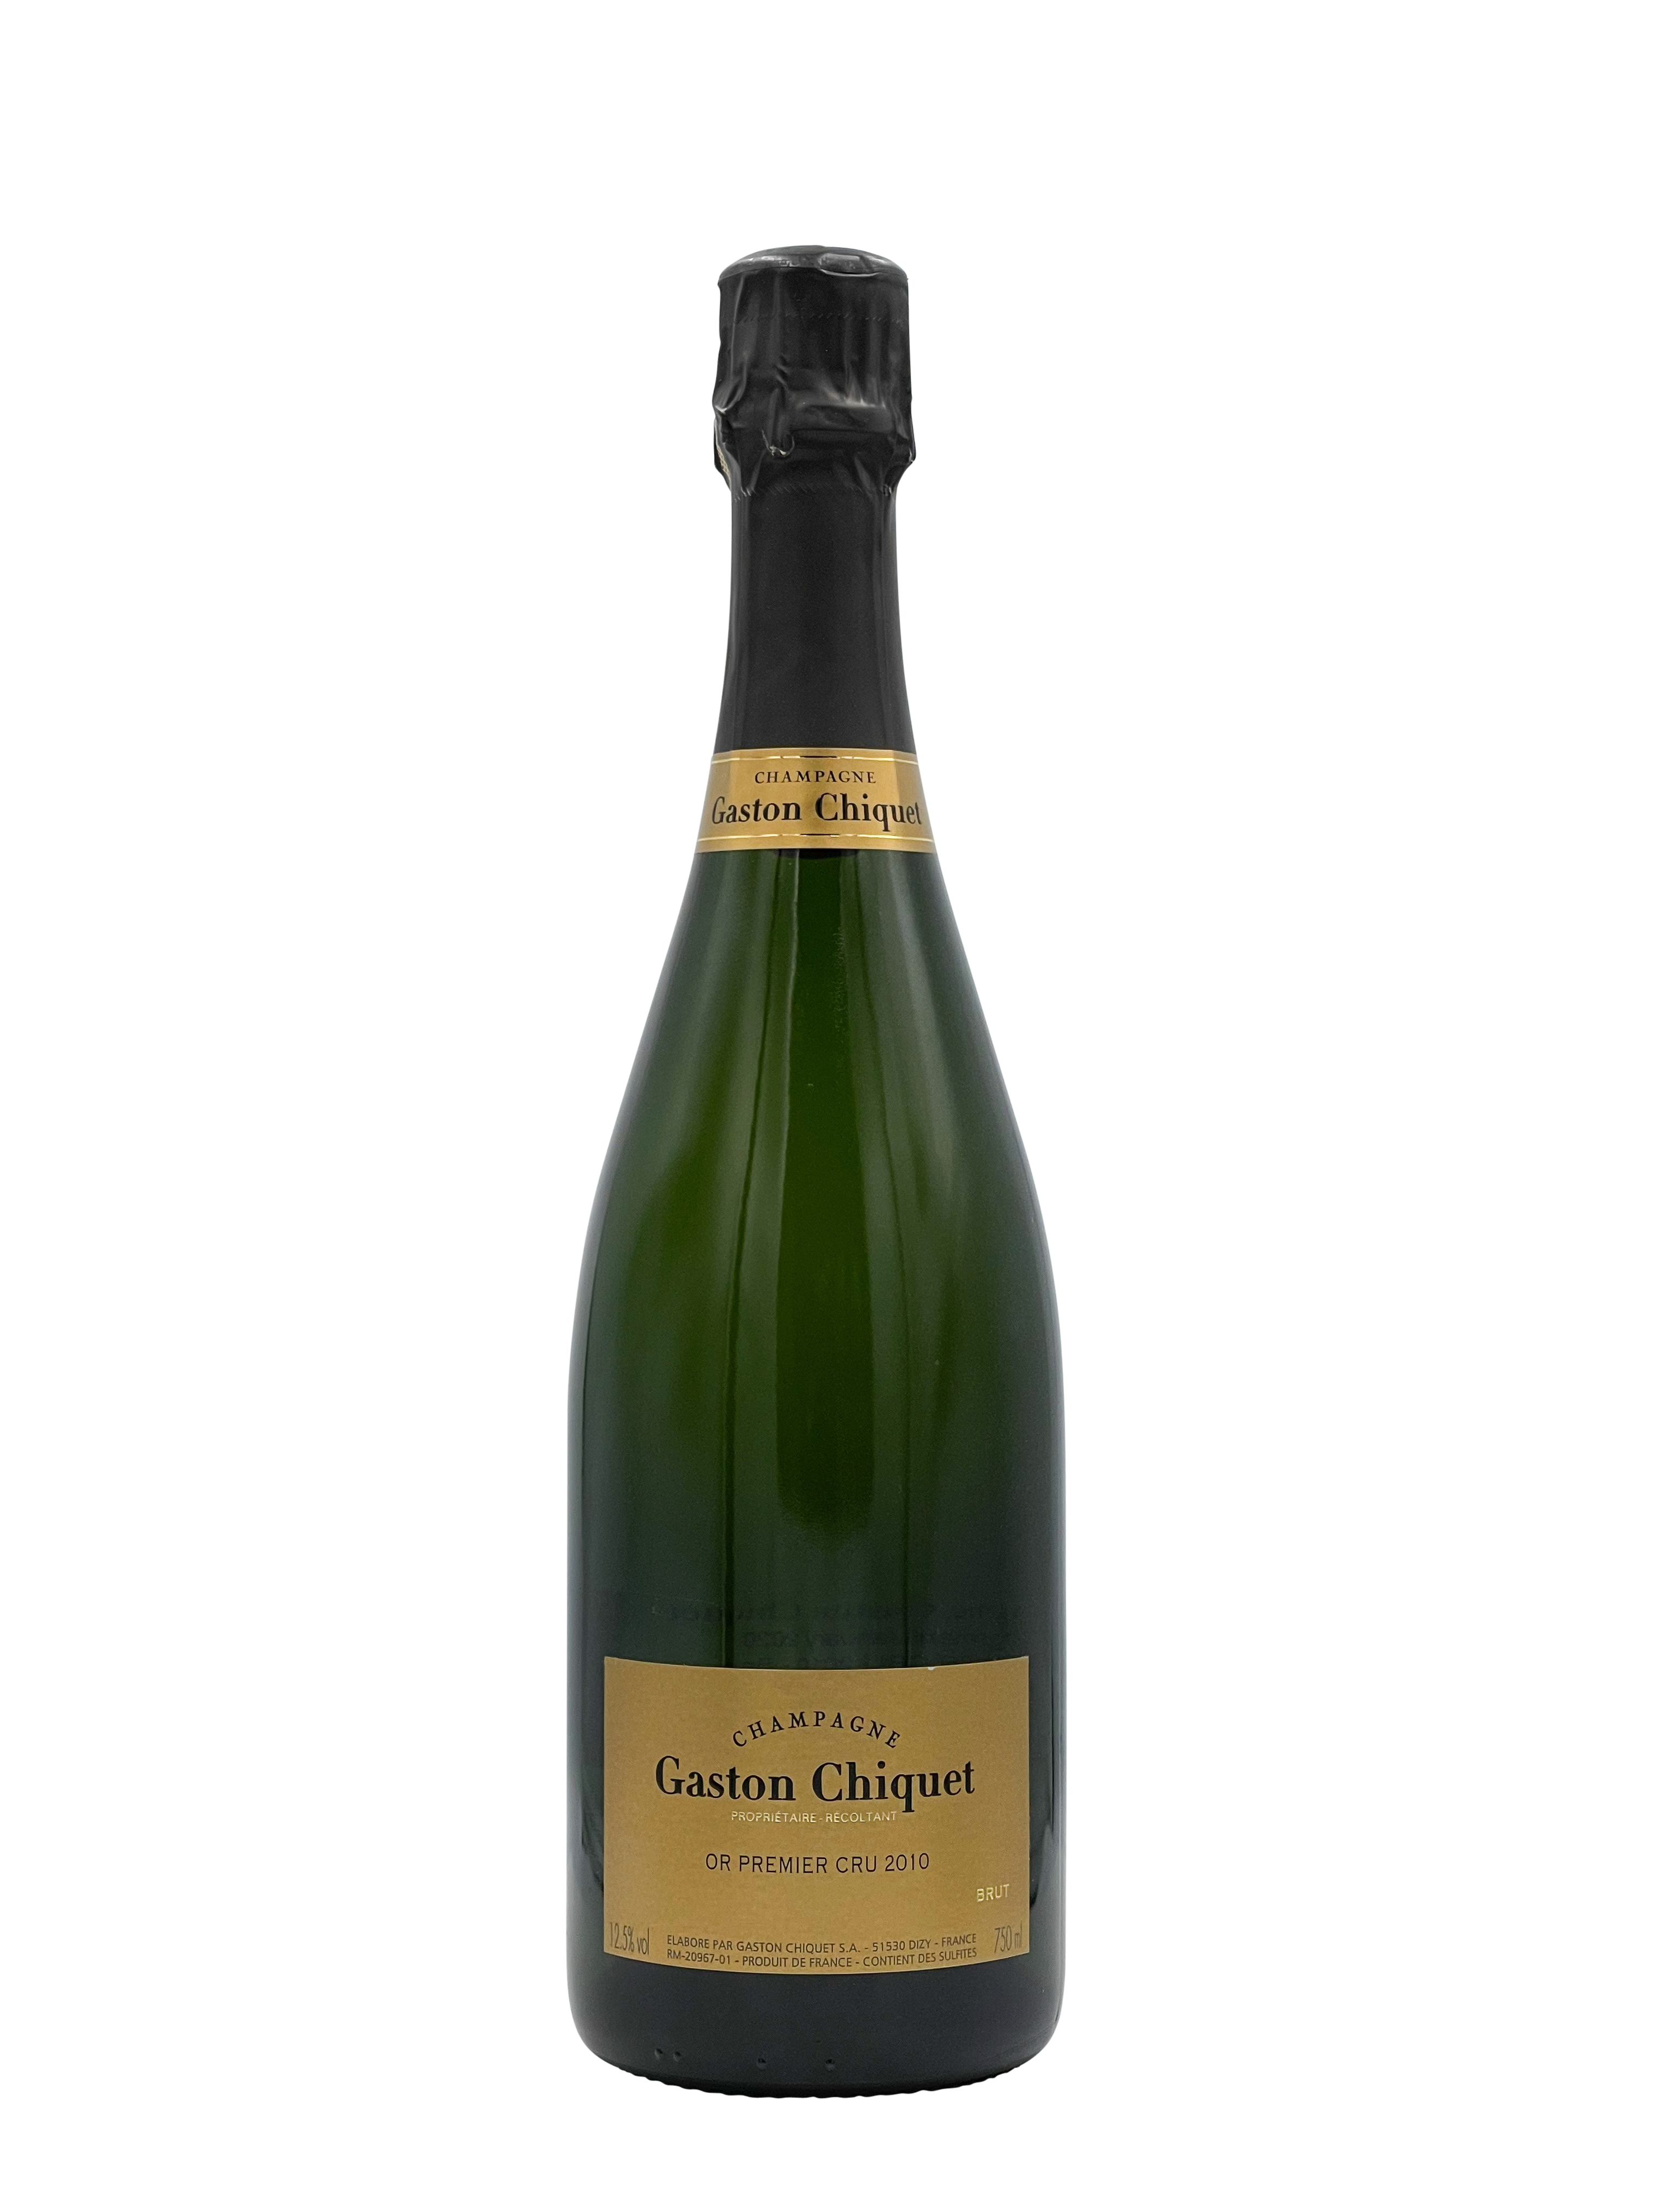 Champagne Gaston Chiquet "Or" Brut '10